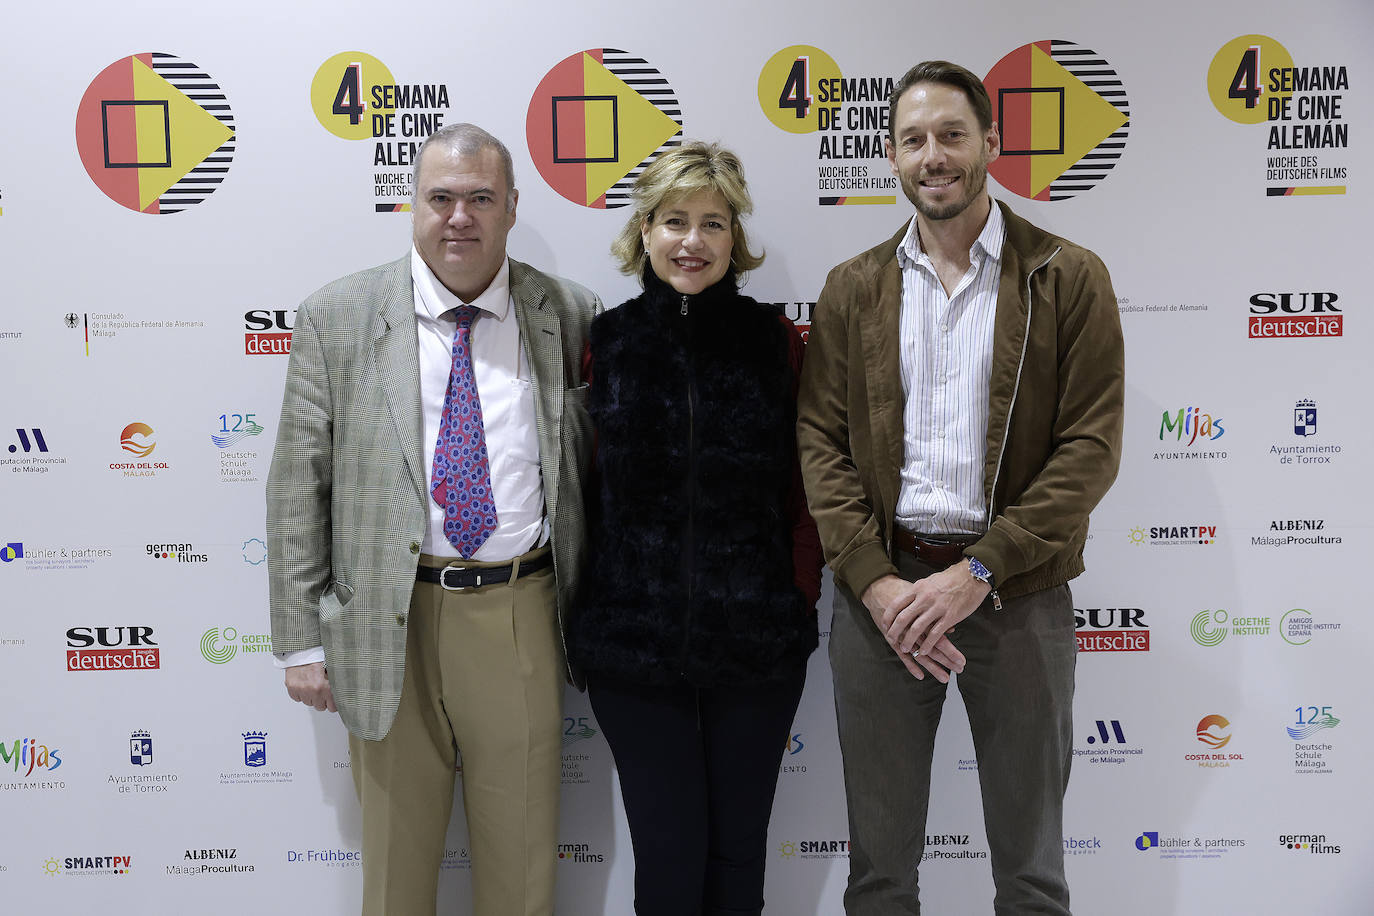 German film week opens in Malaga - in pictures